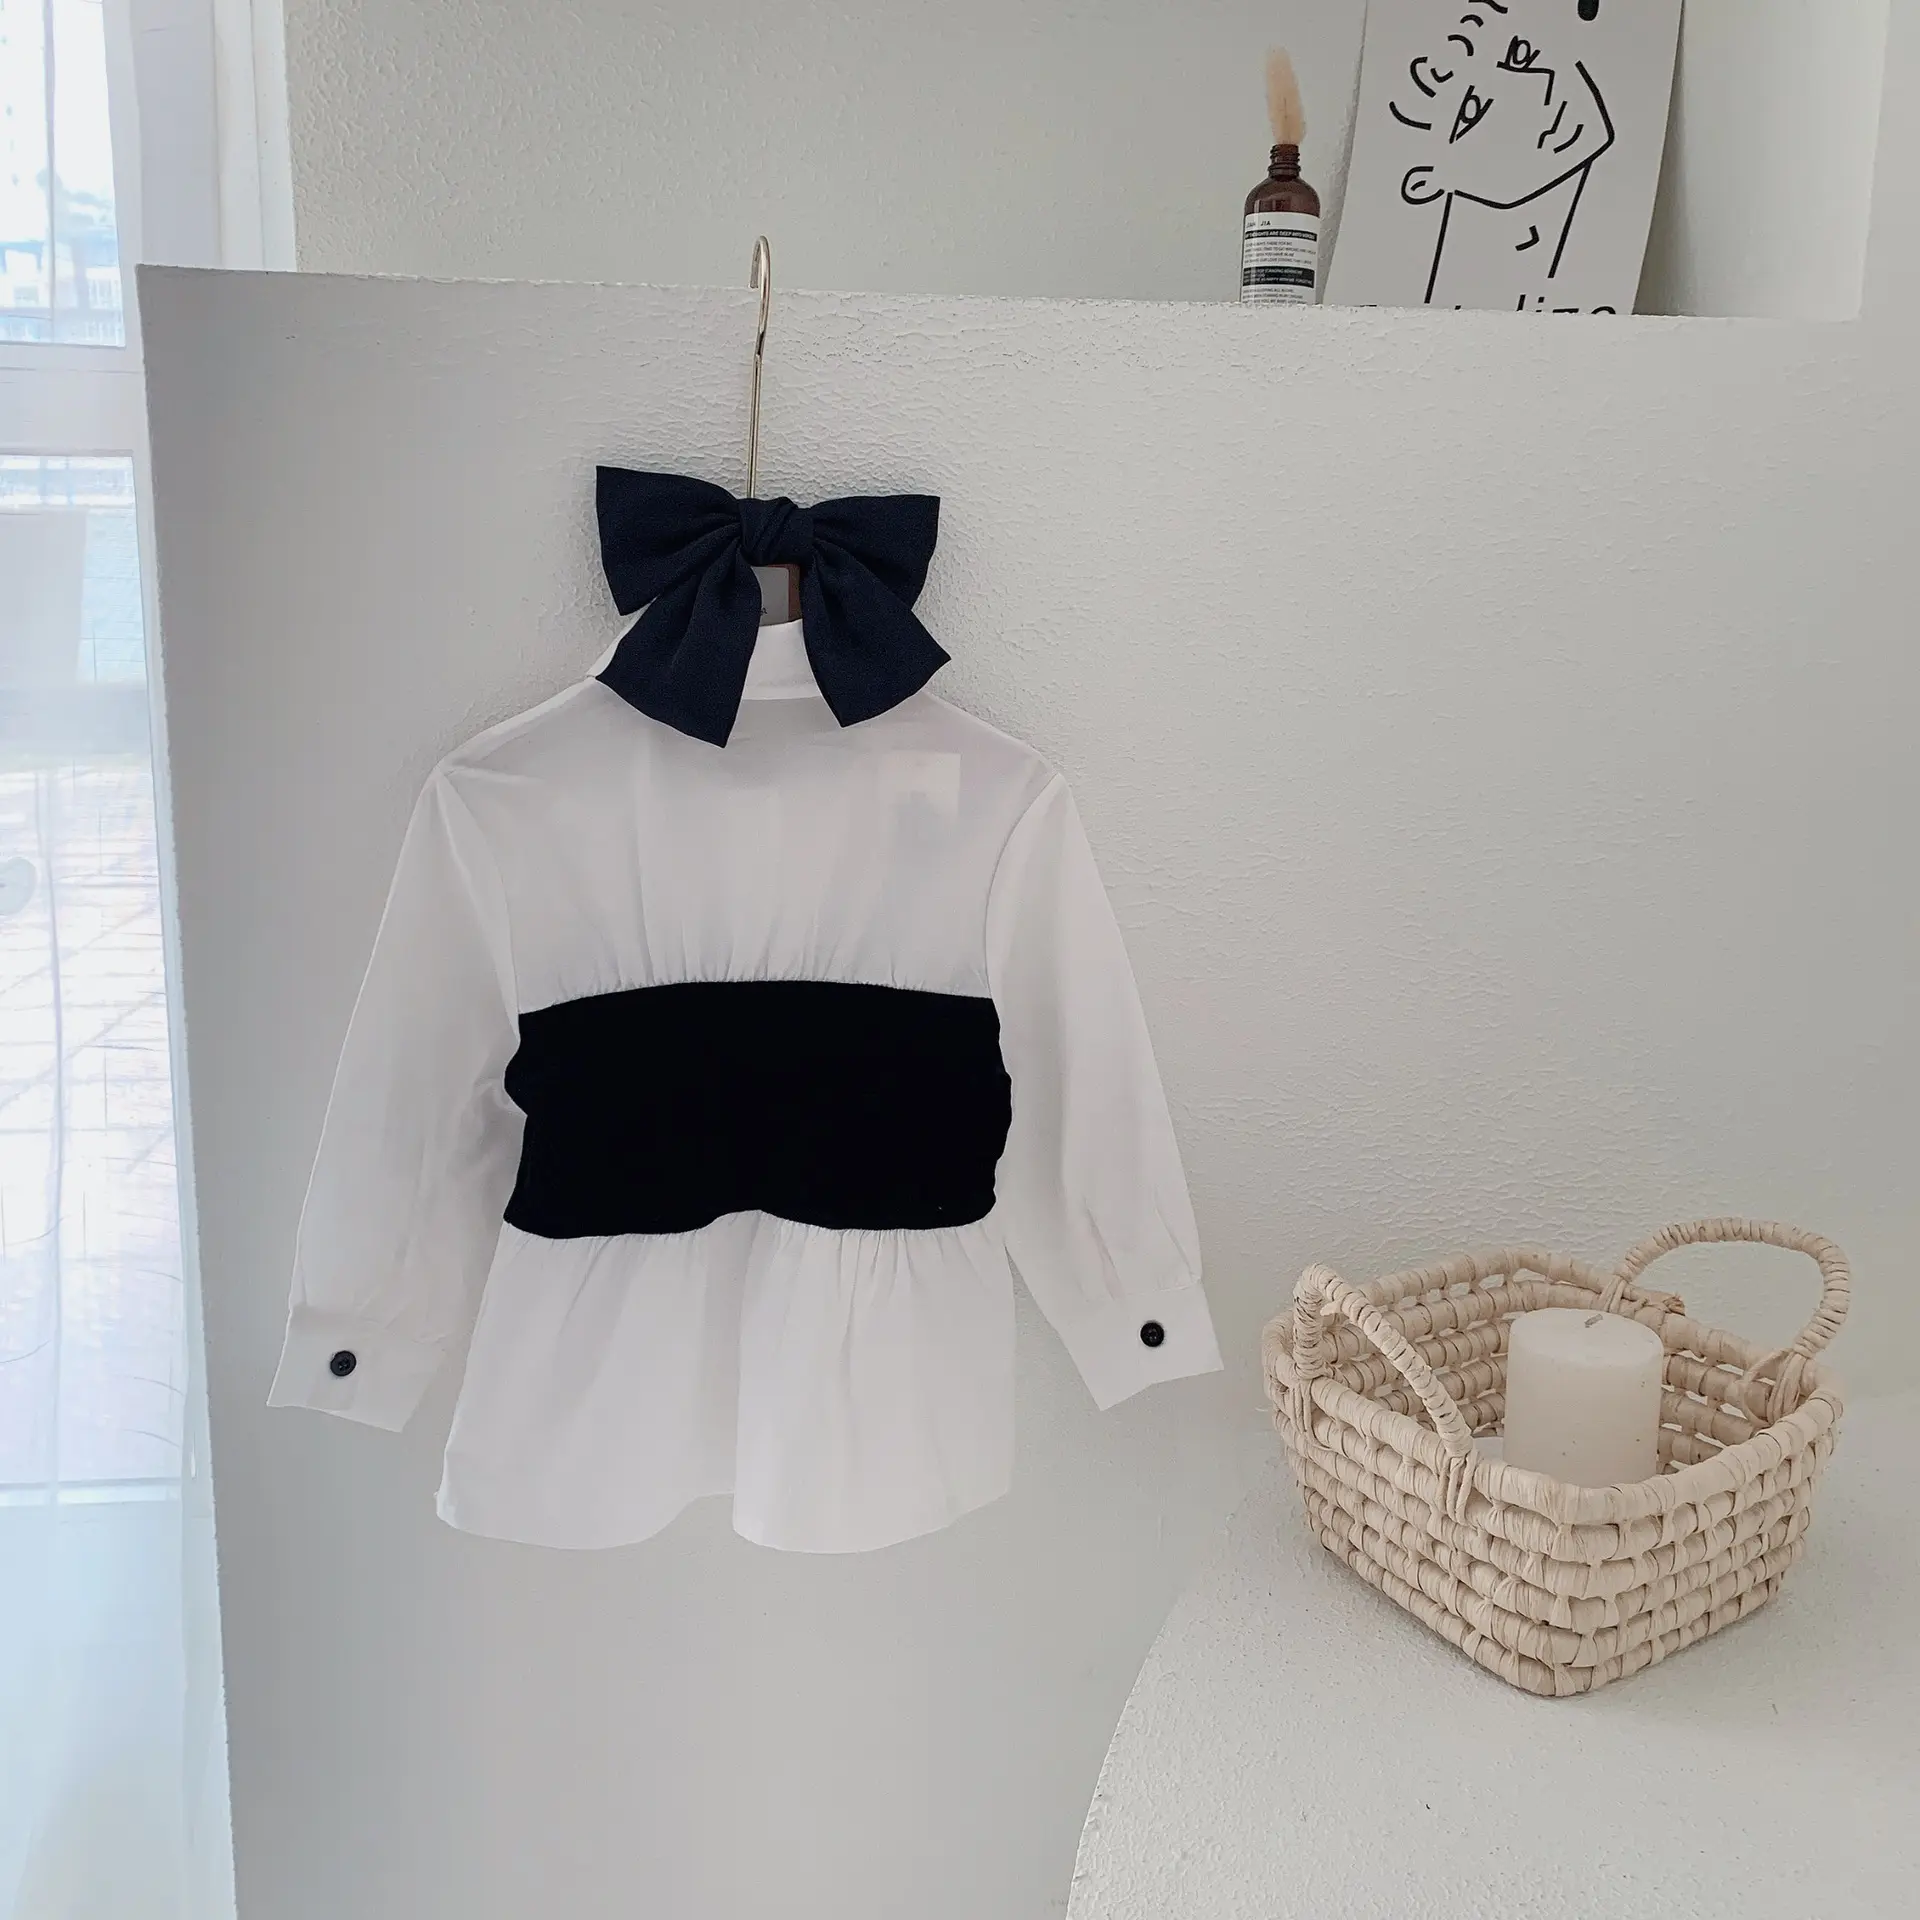 Fashion Kinderen Kids Herfst Kleding Lange Mouwen Witte Top Shirts Blouse Voor 2-7 Jaar Oude Baby Meisjes